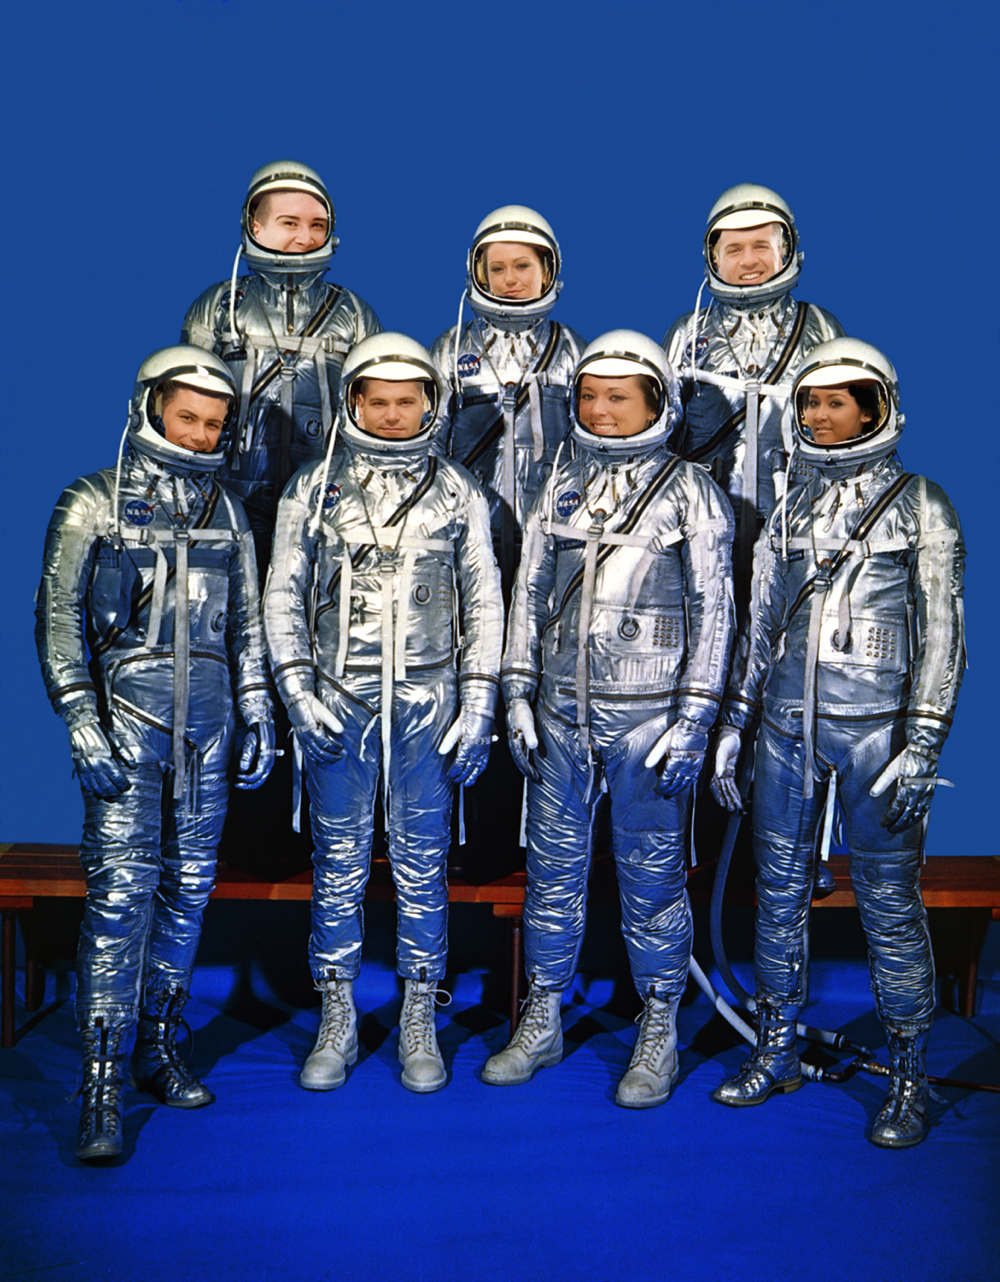 Original_7_Astronauts_in_Spacesuits_-_GPN-2000-001293 copy